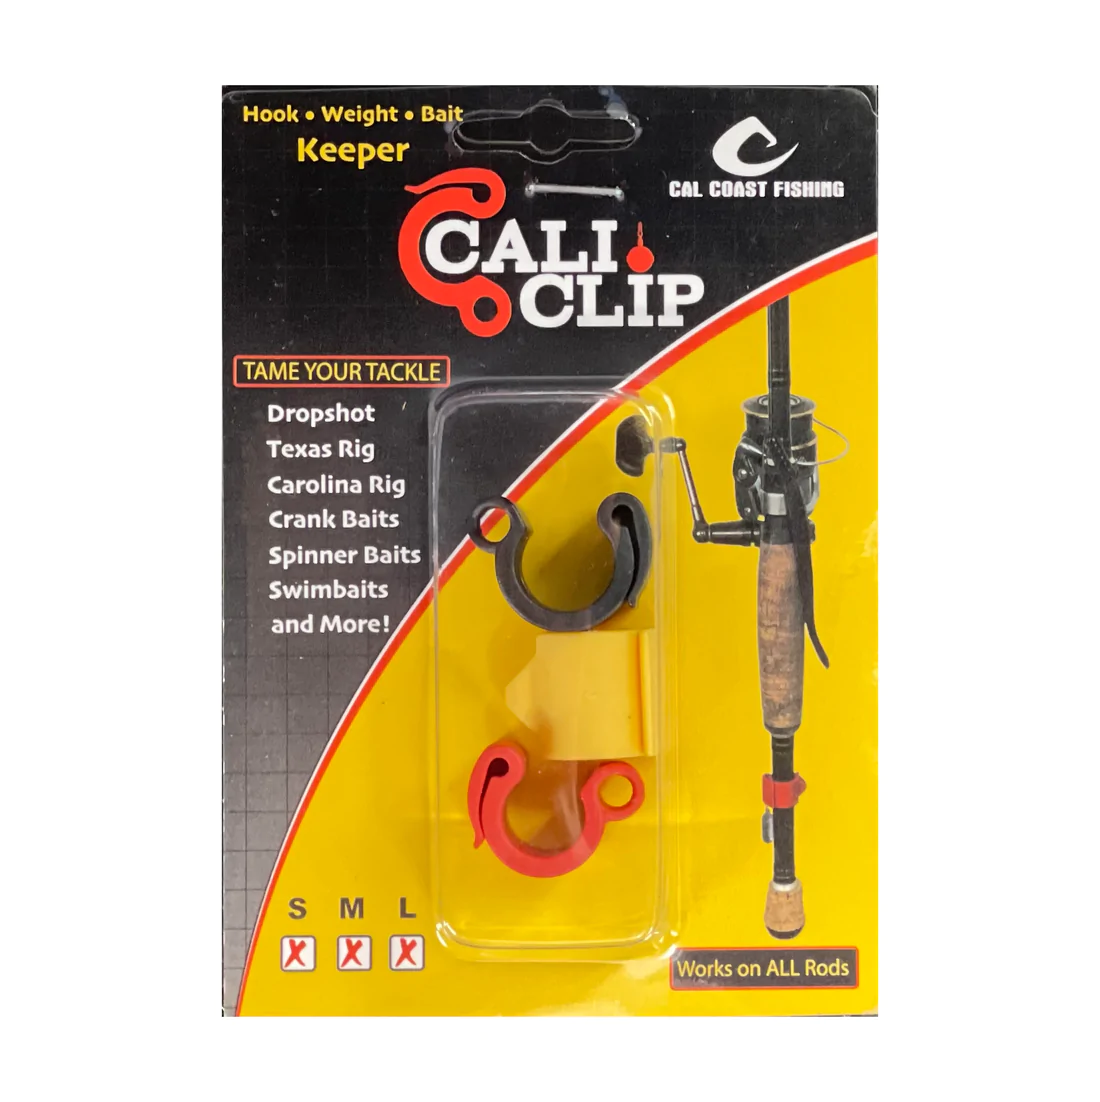 Cal Coast Cali Clip Drop Shot Weight and Hook Holder — Durable